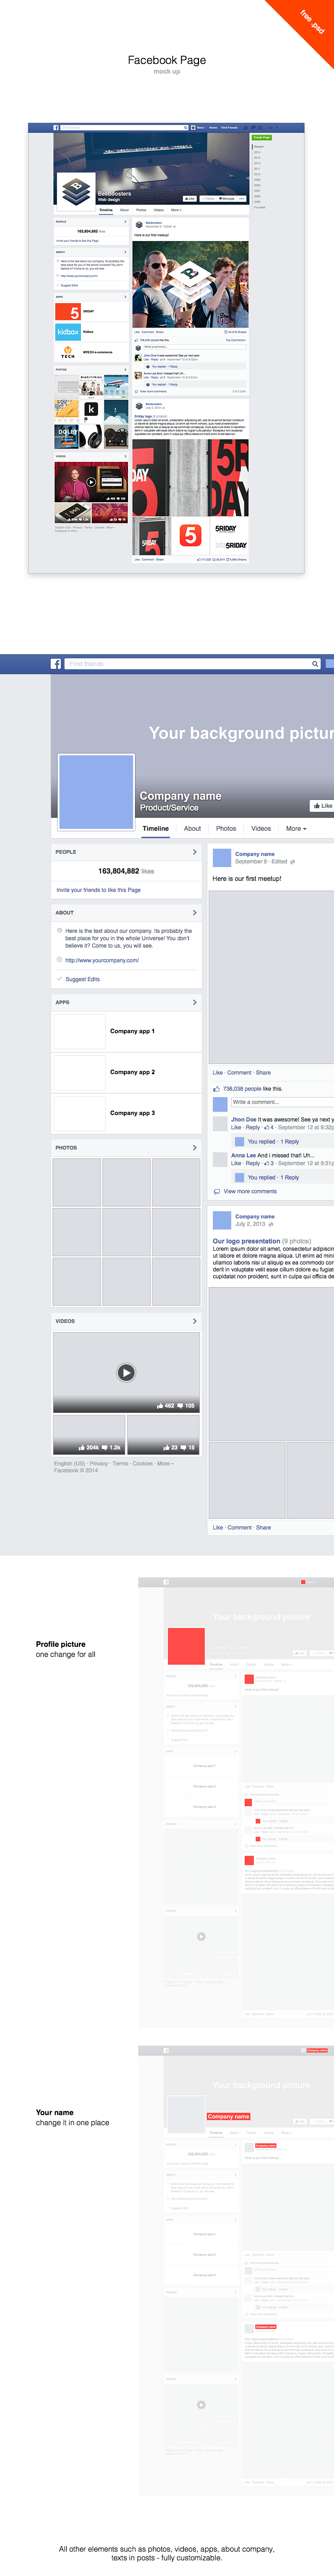 Facebook Page mock up PSD